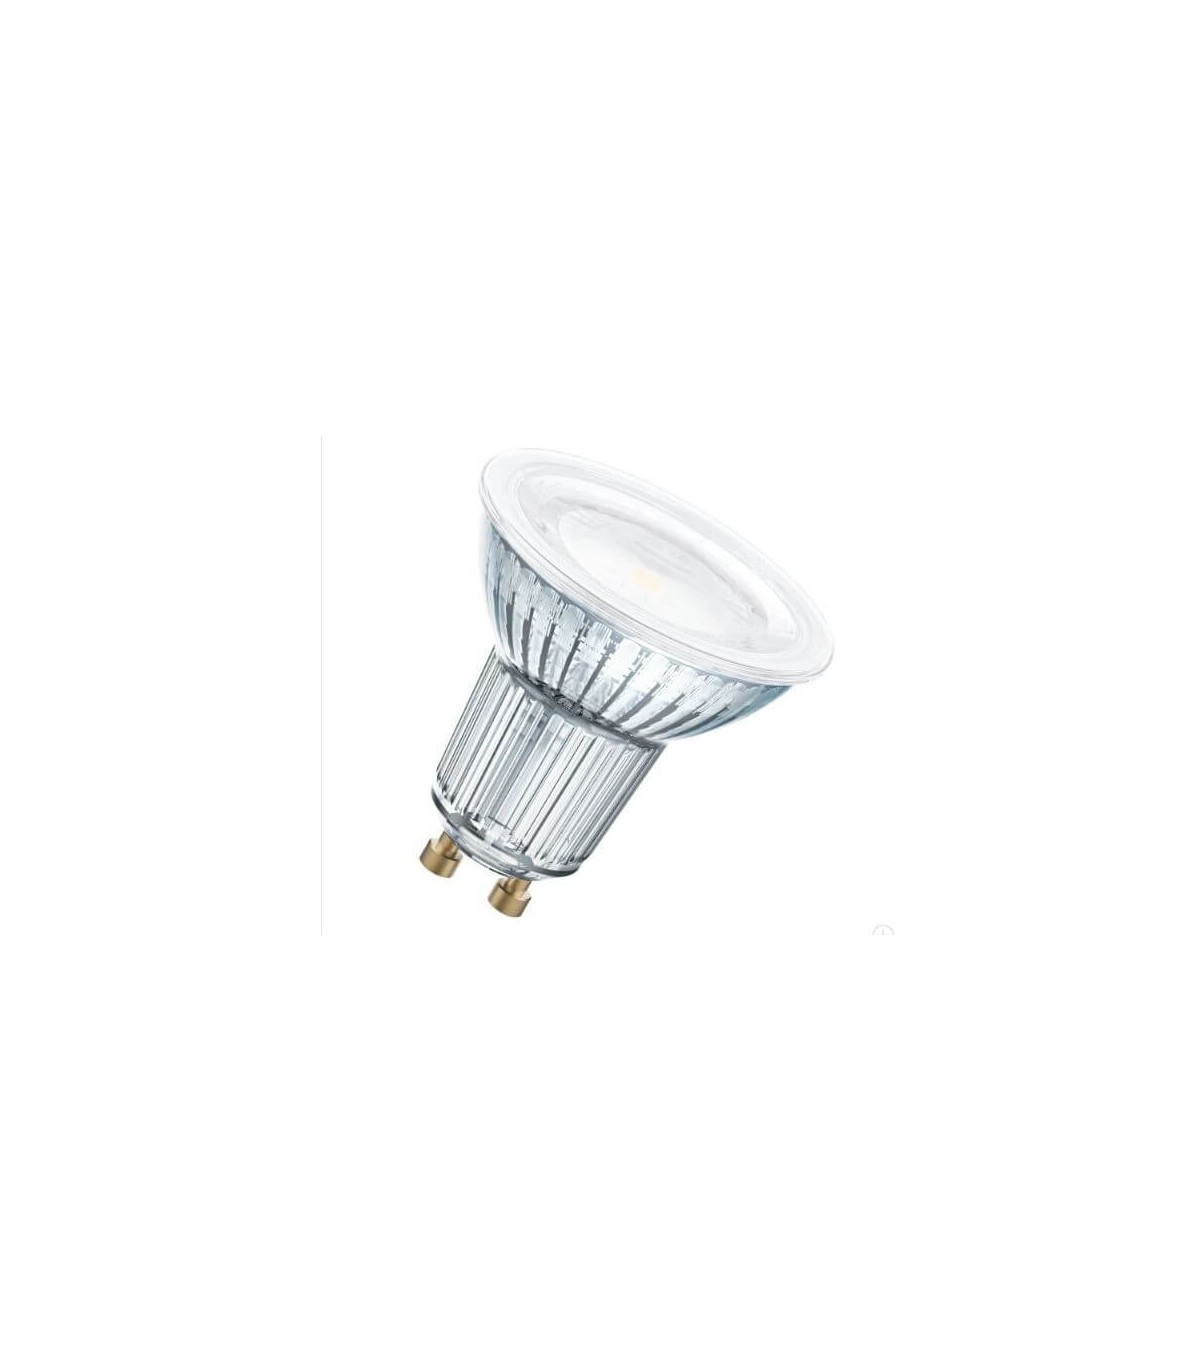 Ampoule LED Luxtek Tubulaire 10W substitut 100w 1050 lumens Blanc froid  4000K Dimmable GU10